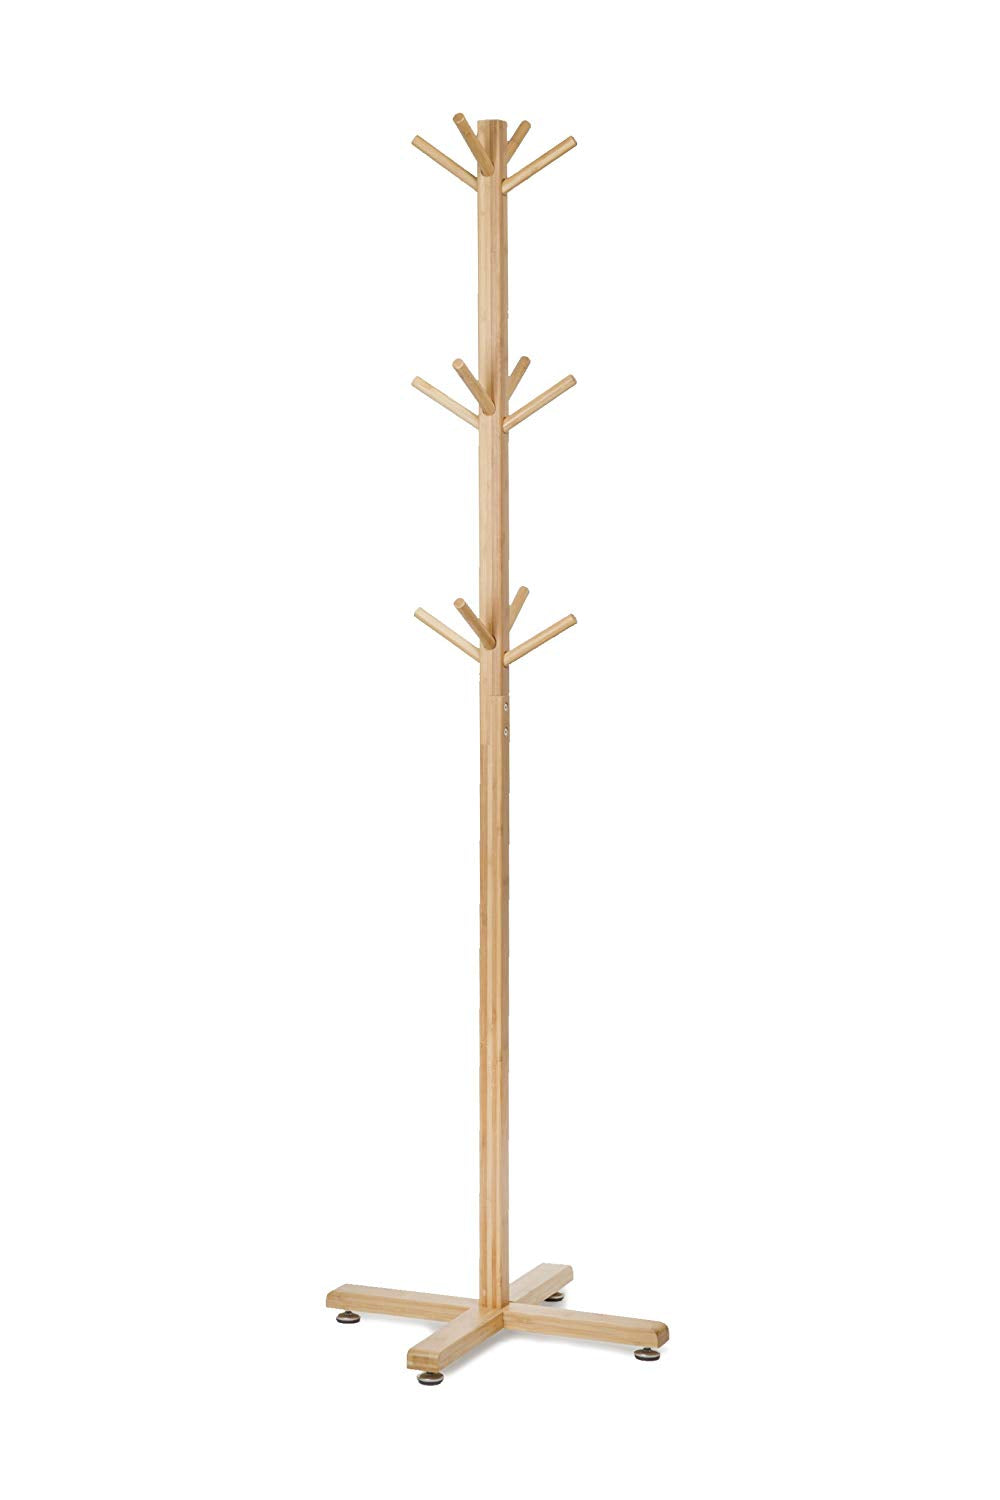 BambooWorx- Bamboo Standing Coat Rack Hat Hanger - 12 Hooks for Jacket, Freestanding Hallway Wood Tree Stand.